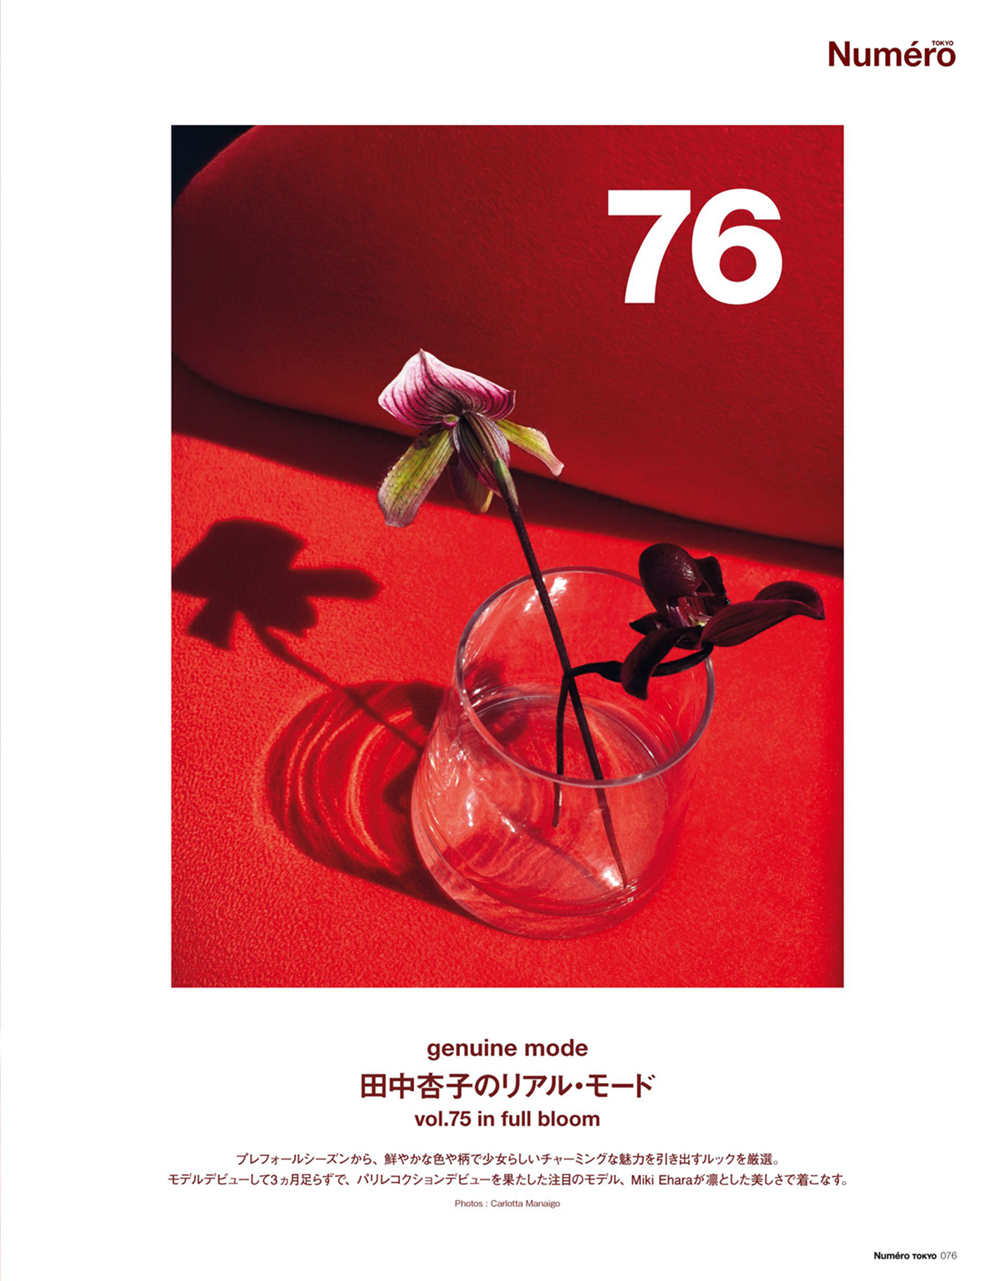 Numéro Japan, June 2017 | Carlotta Manaigo | Il Gufo | Numéro | Haidee Findlay-Levin | Numerique Retouch Photo Retouching Studio